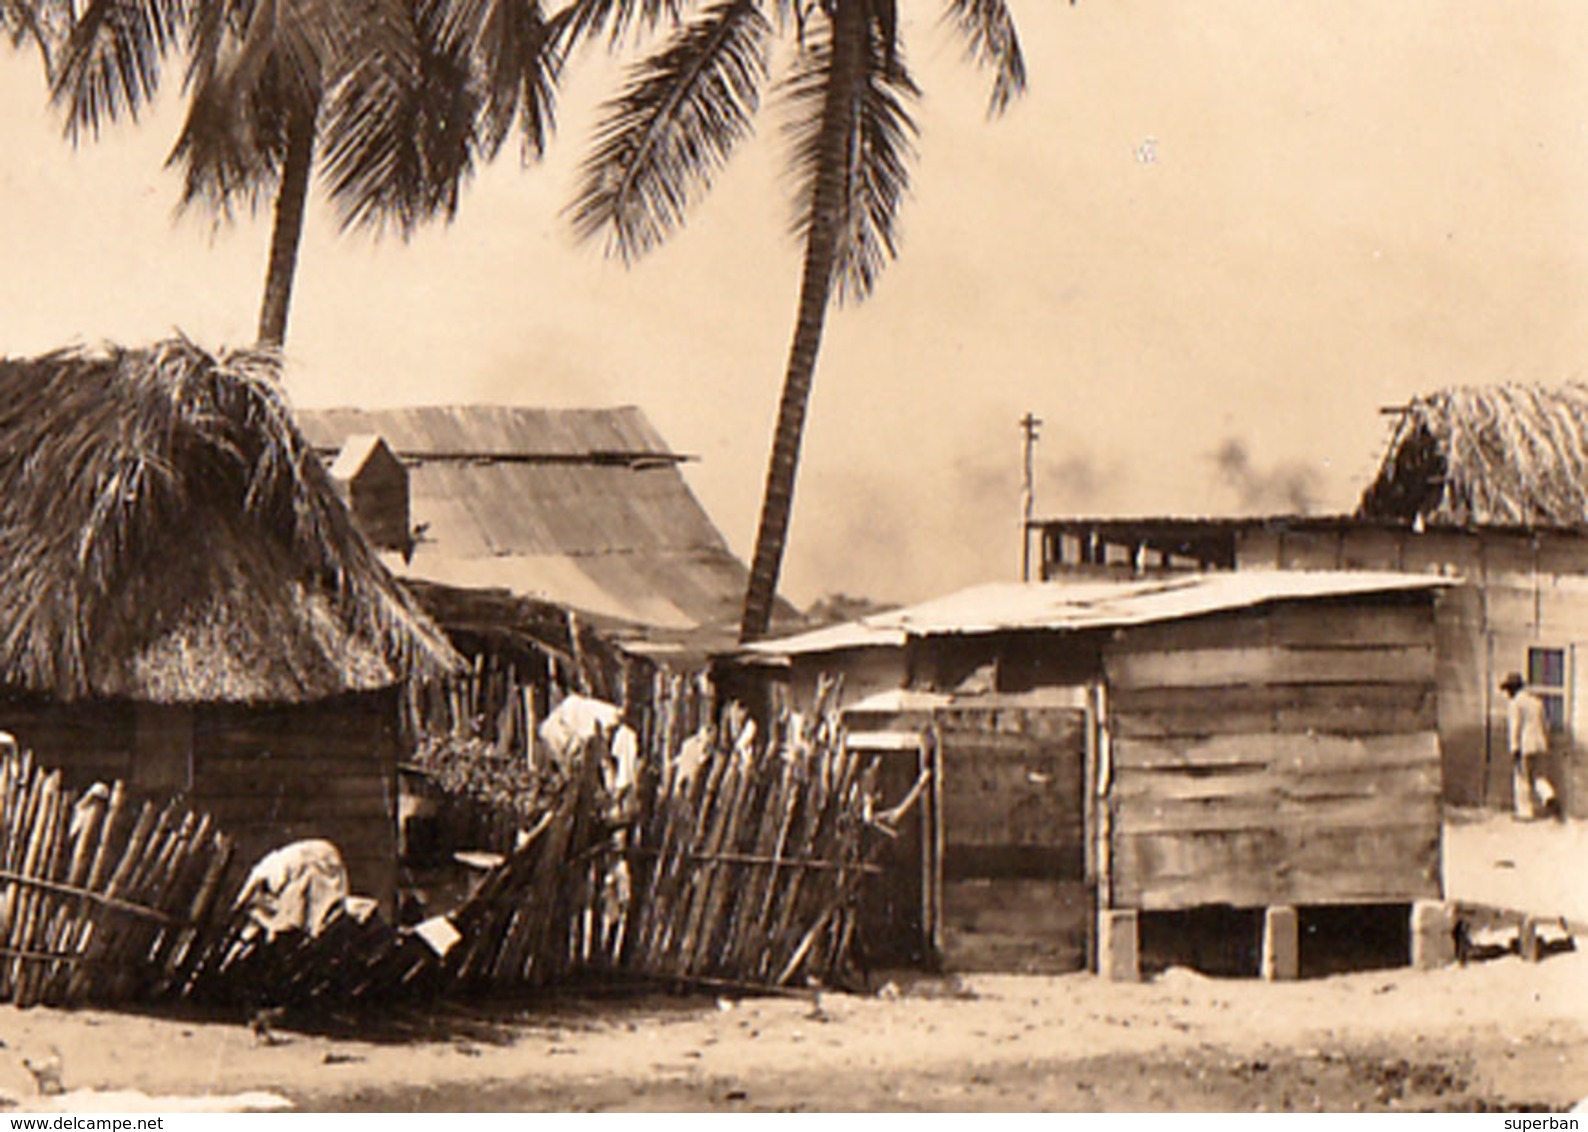 COSTA RICA : NATIVE QUARTERS In THE WEST INDIES - CARTE VRAIE PHOTO / REAL PHOTO POSTCARD ~ 1930 - '940 (ae429) - Costa Rica